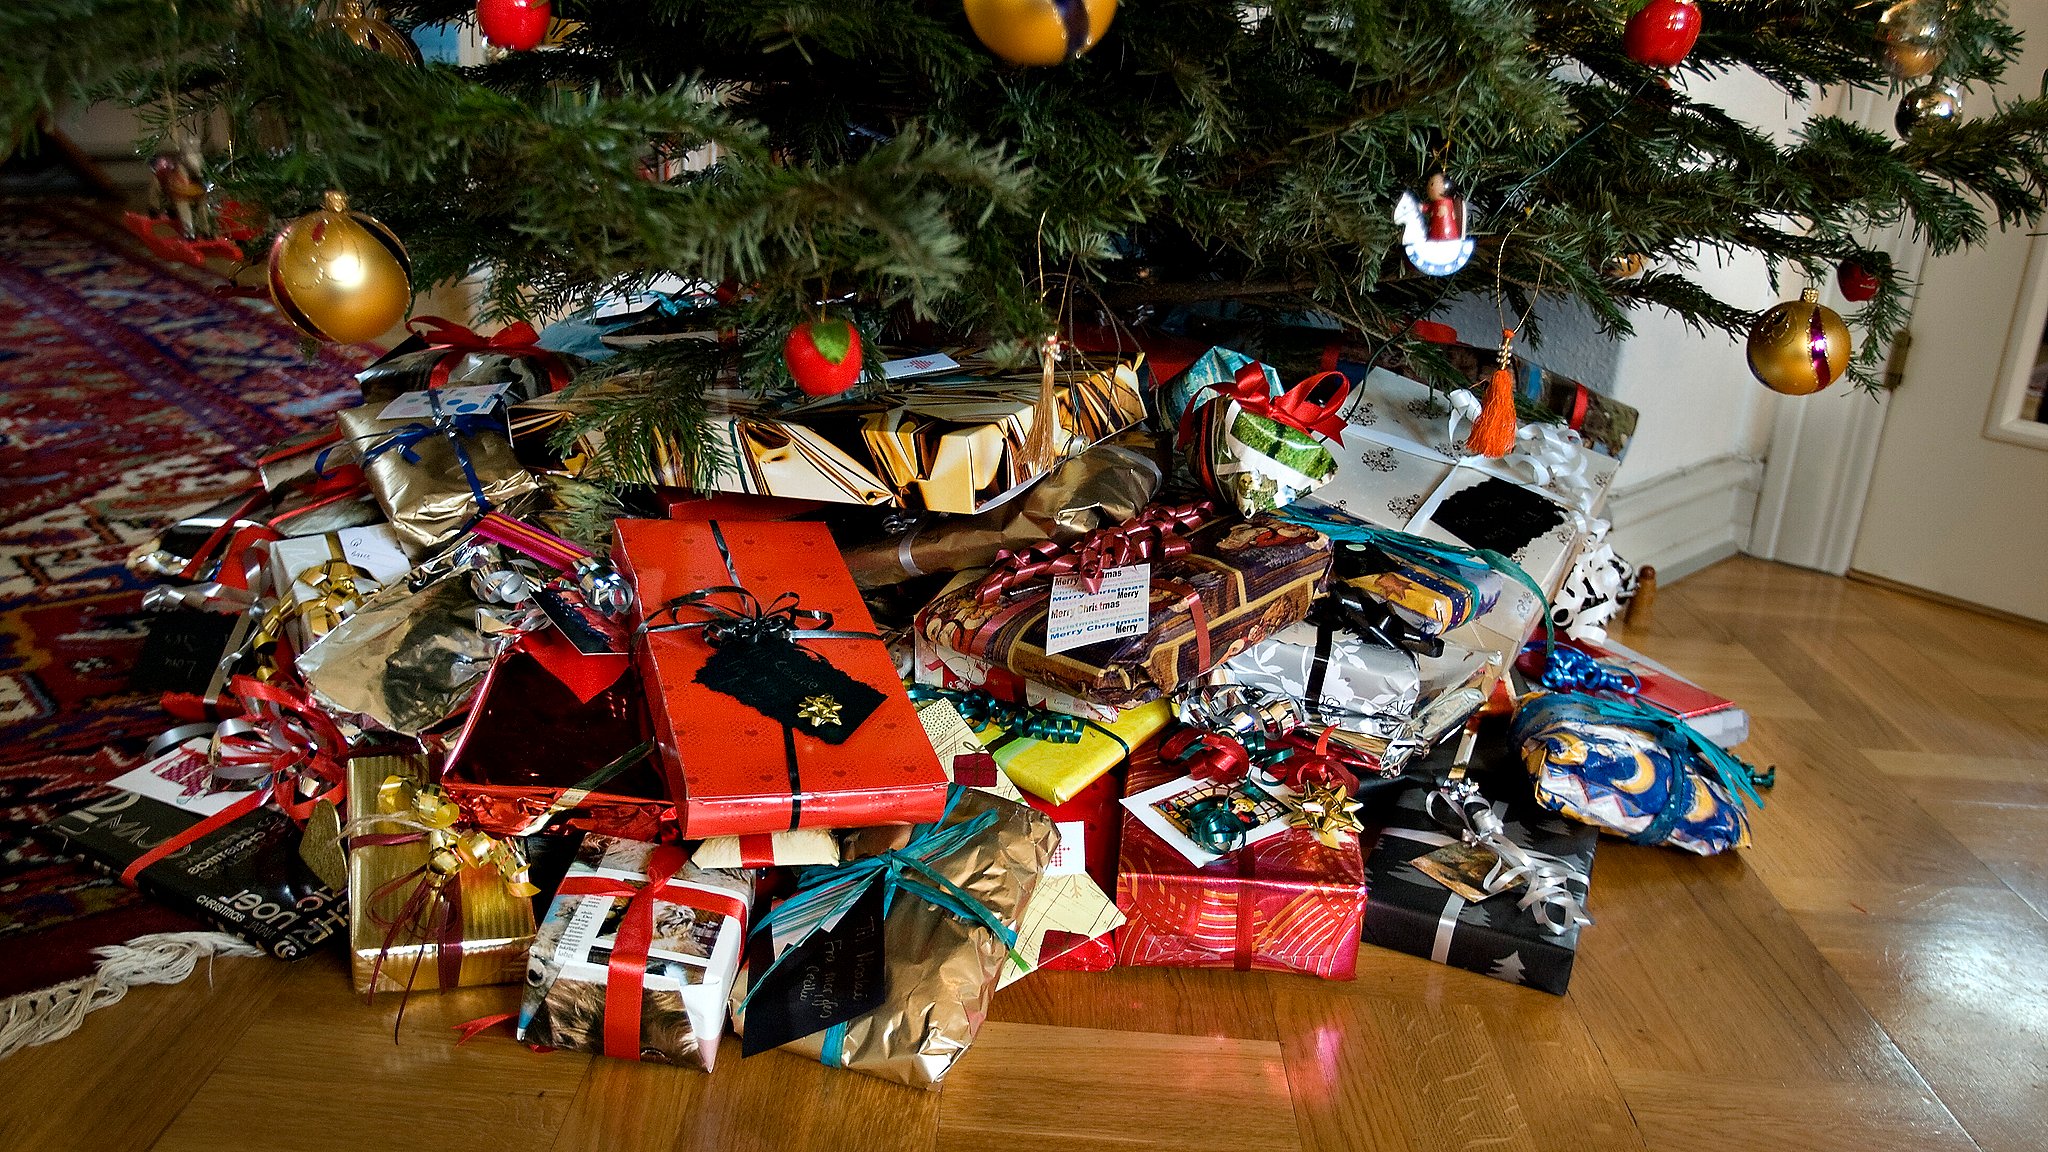 Eksperter om "kritisk høje" tal: - Vi bør aflevere julegaverne på dørtrinnet | ØSTJYLLAND